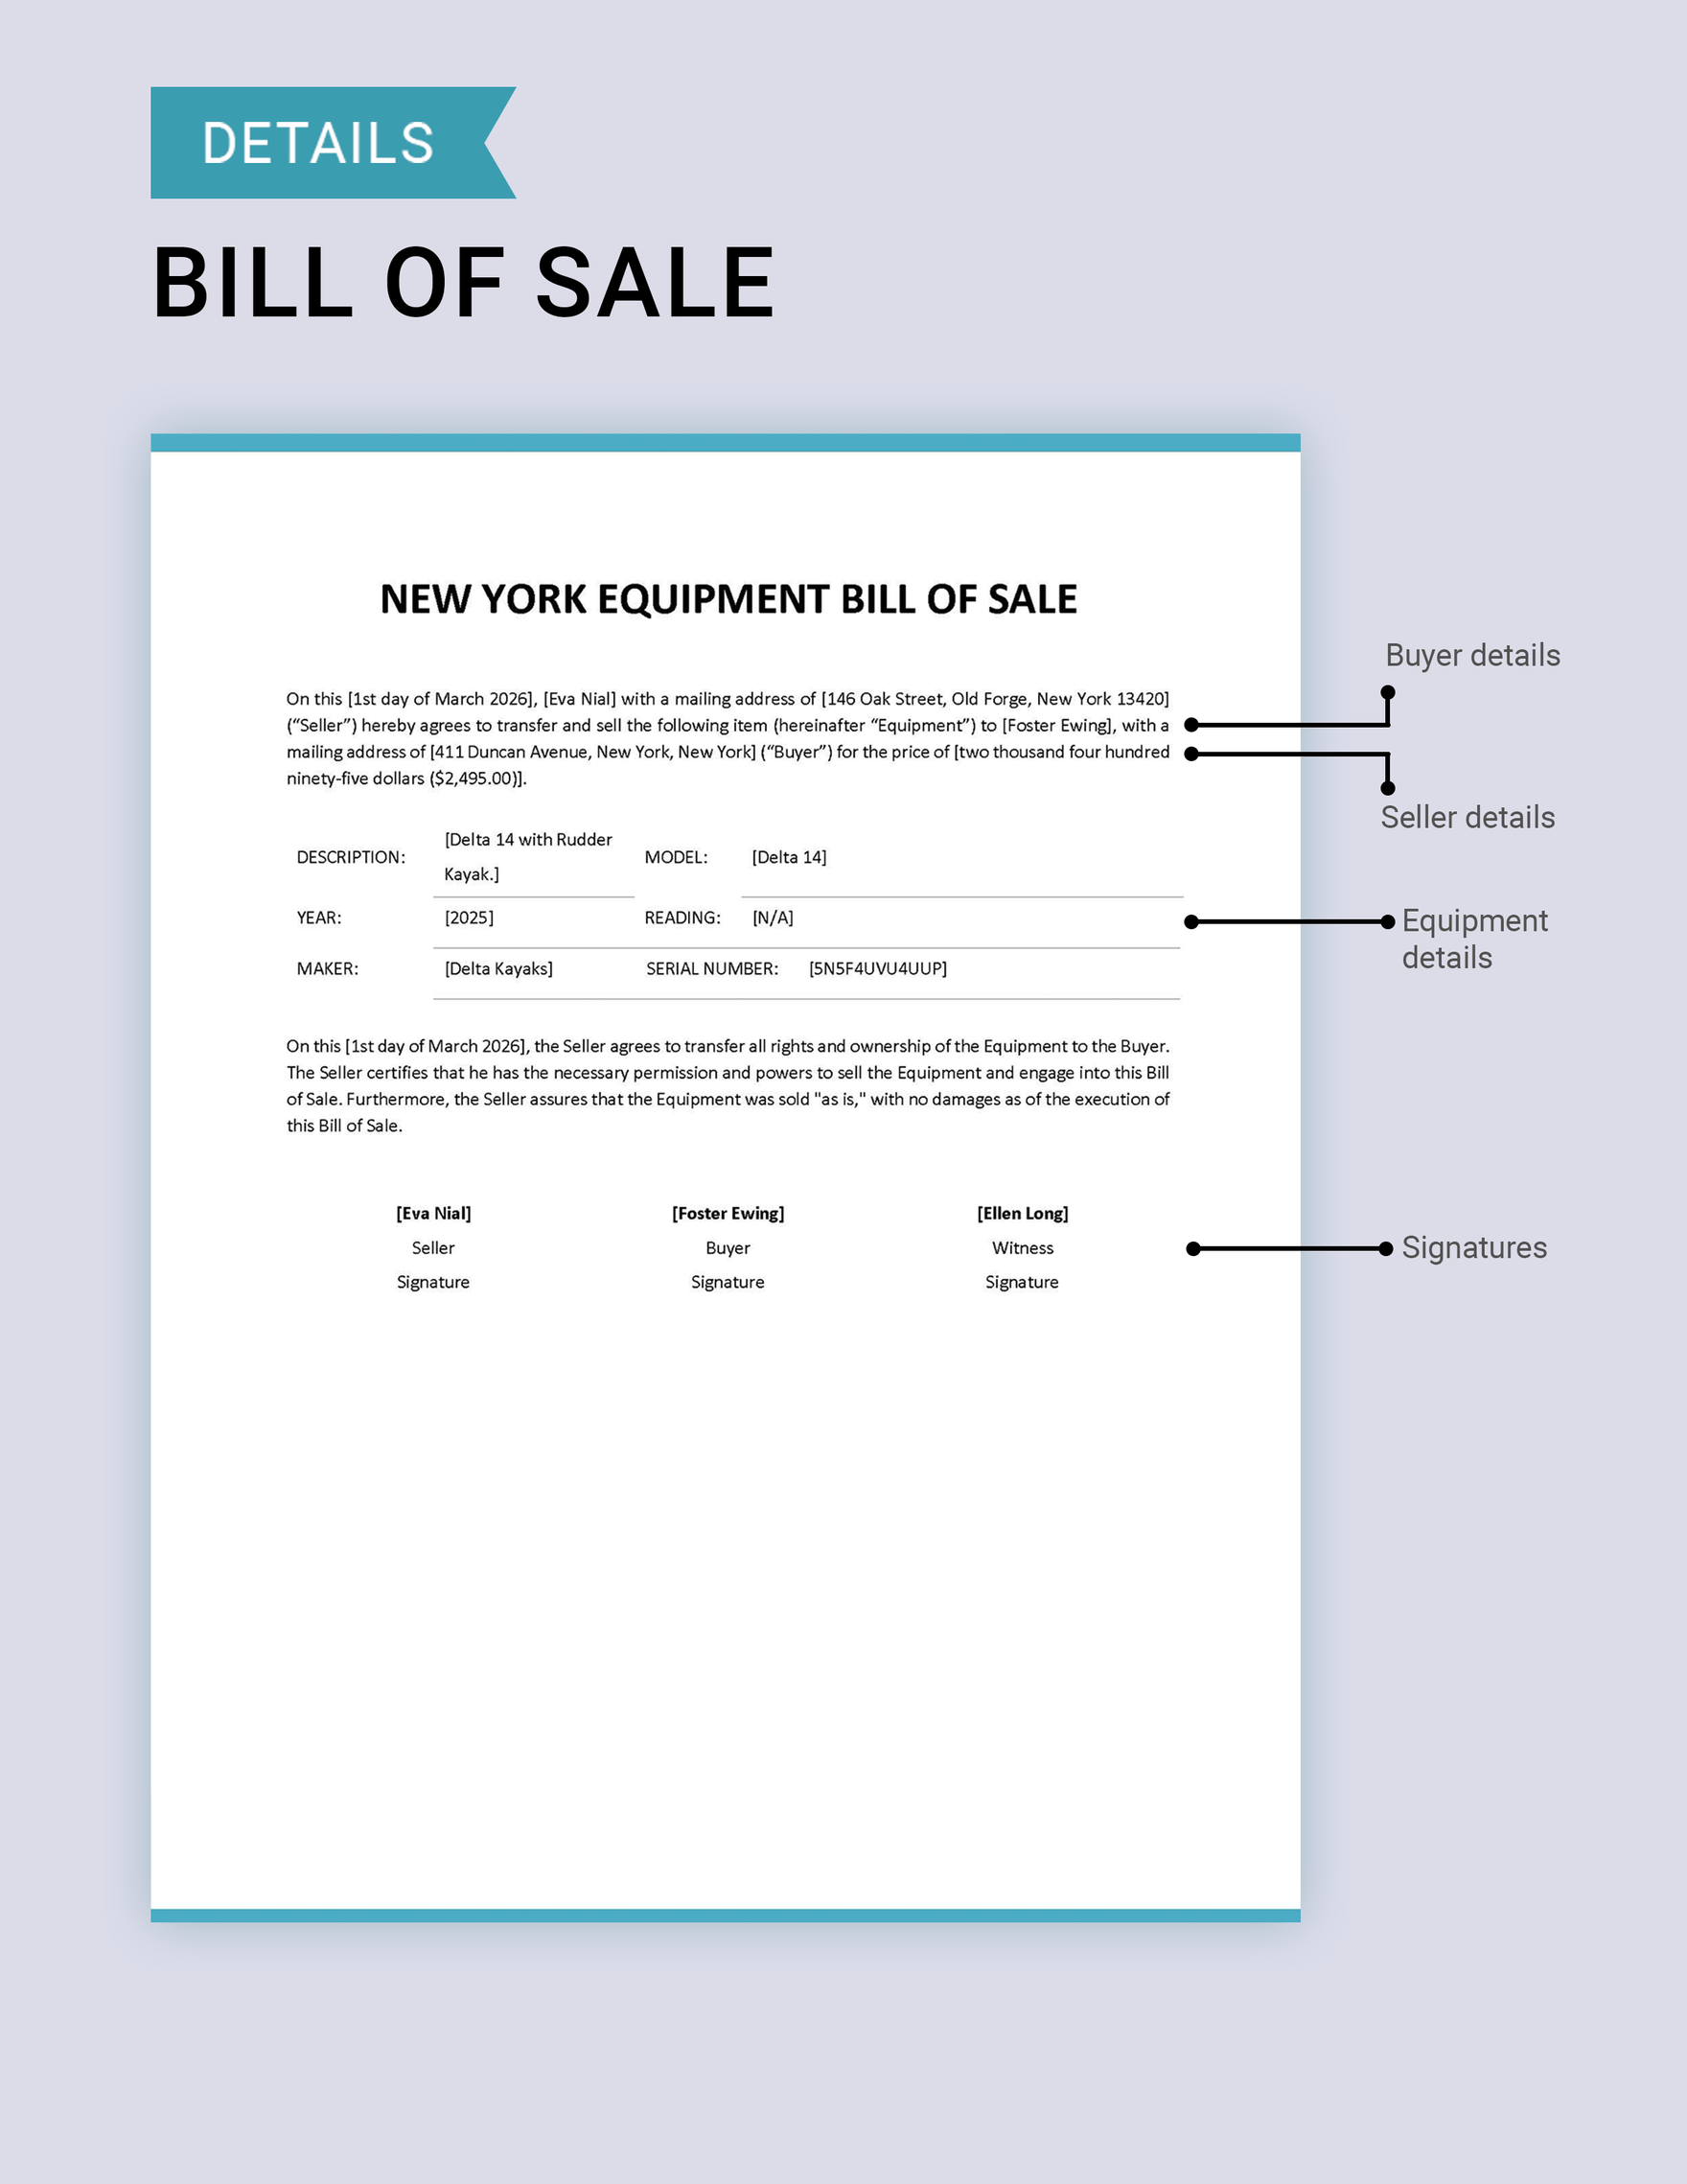 New York Equipment Bill of Sale Template